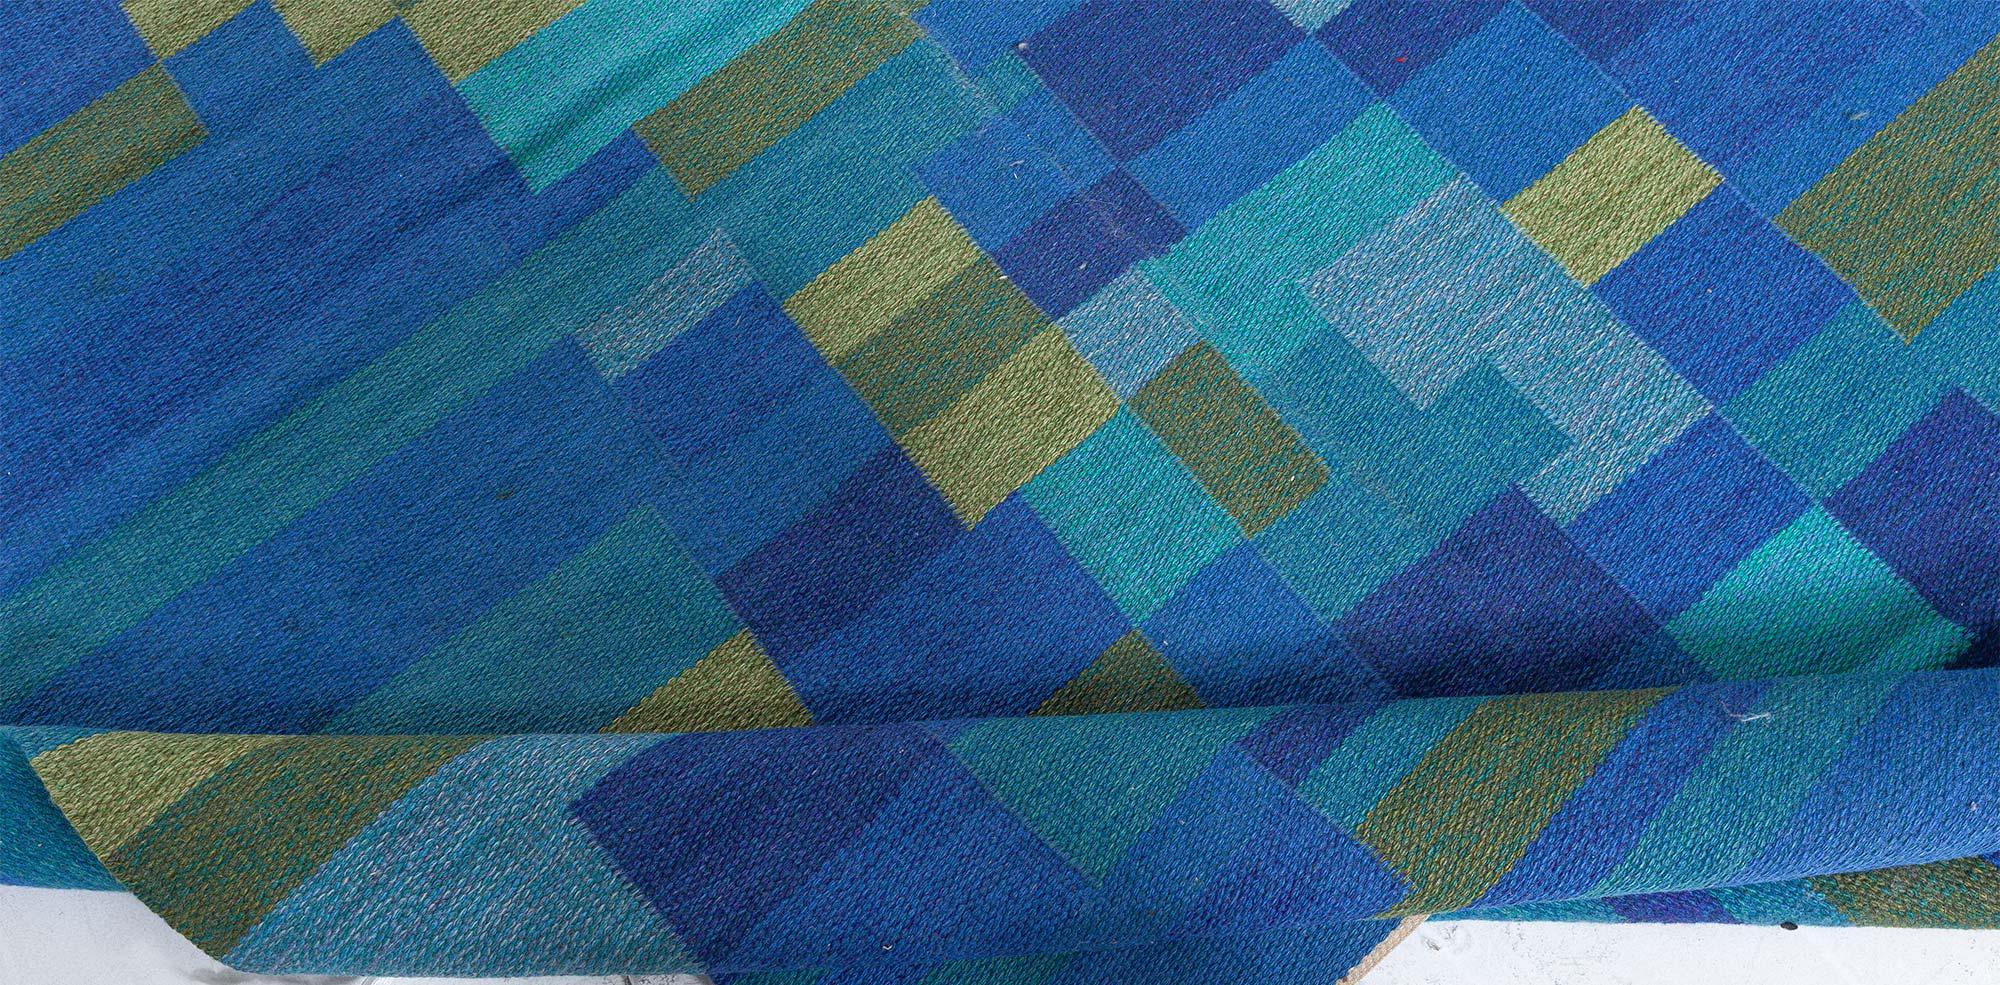 Mid-20th century Swedish Geometric green, blue flat-weave wool rug Signed AB
Size: 5'8